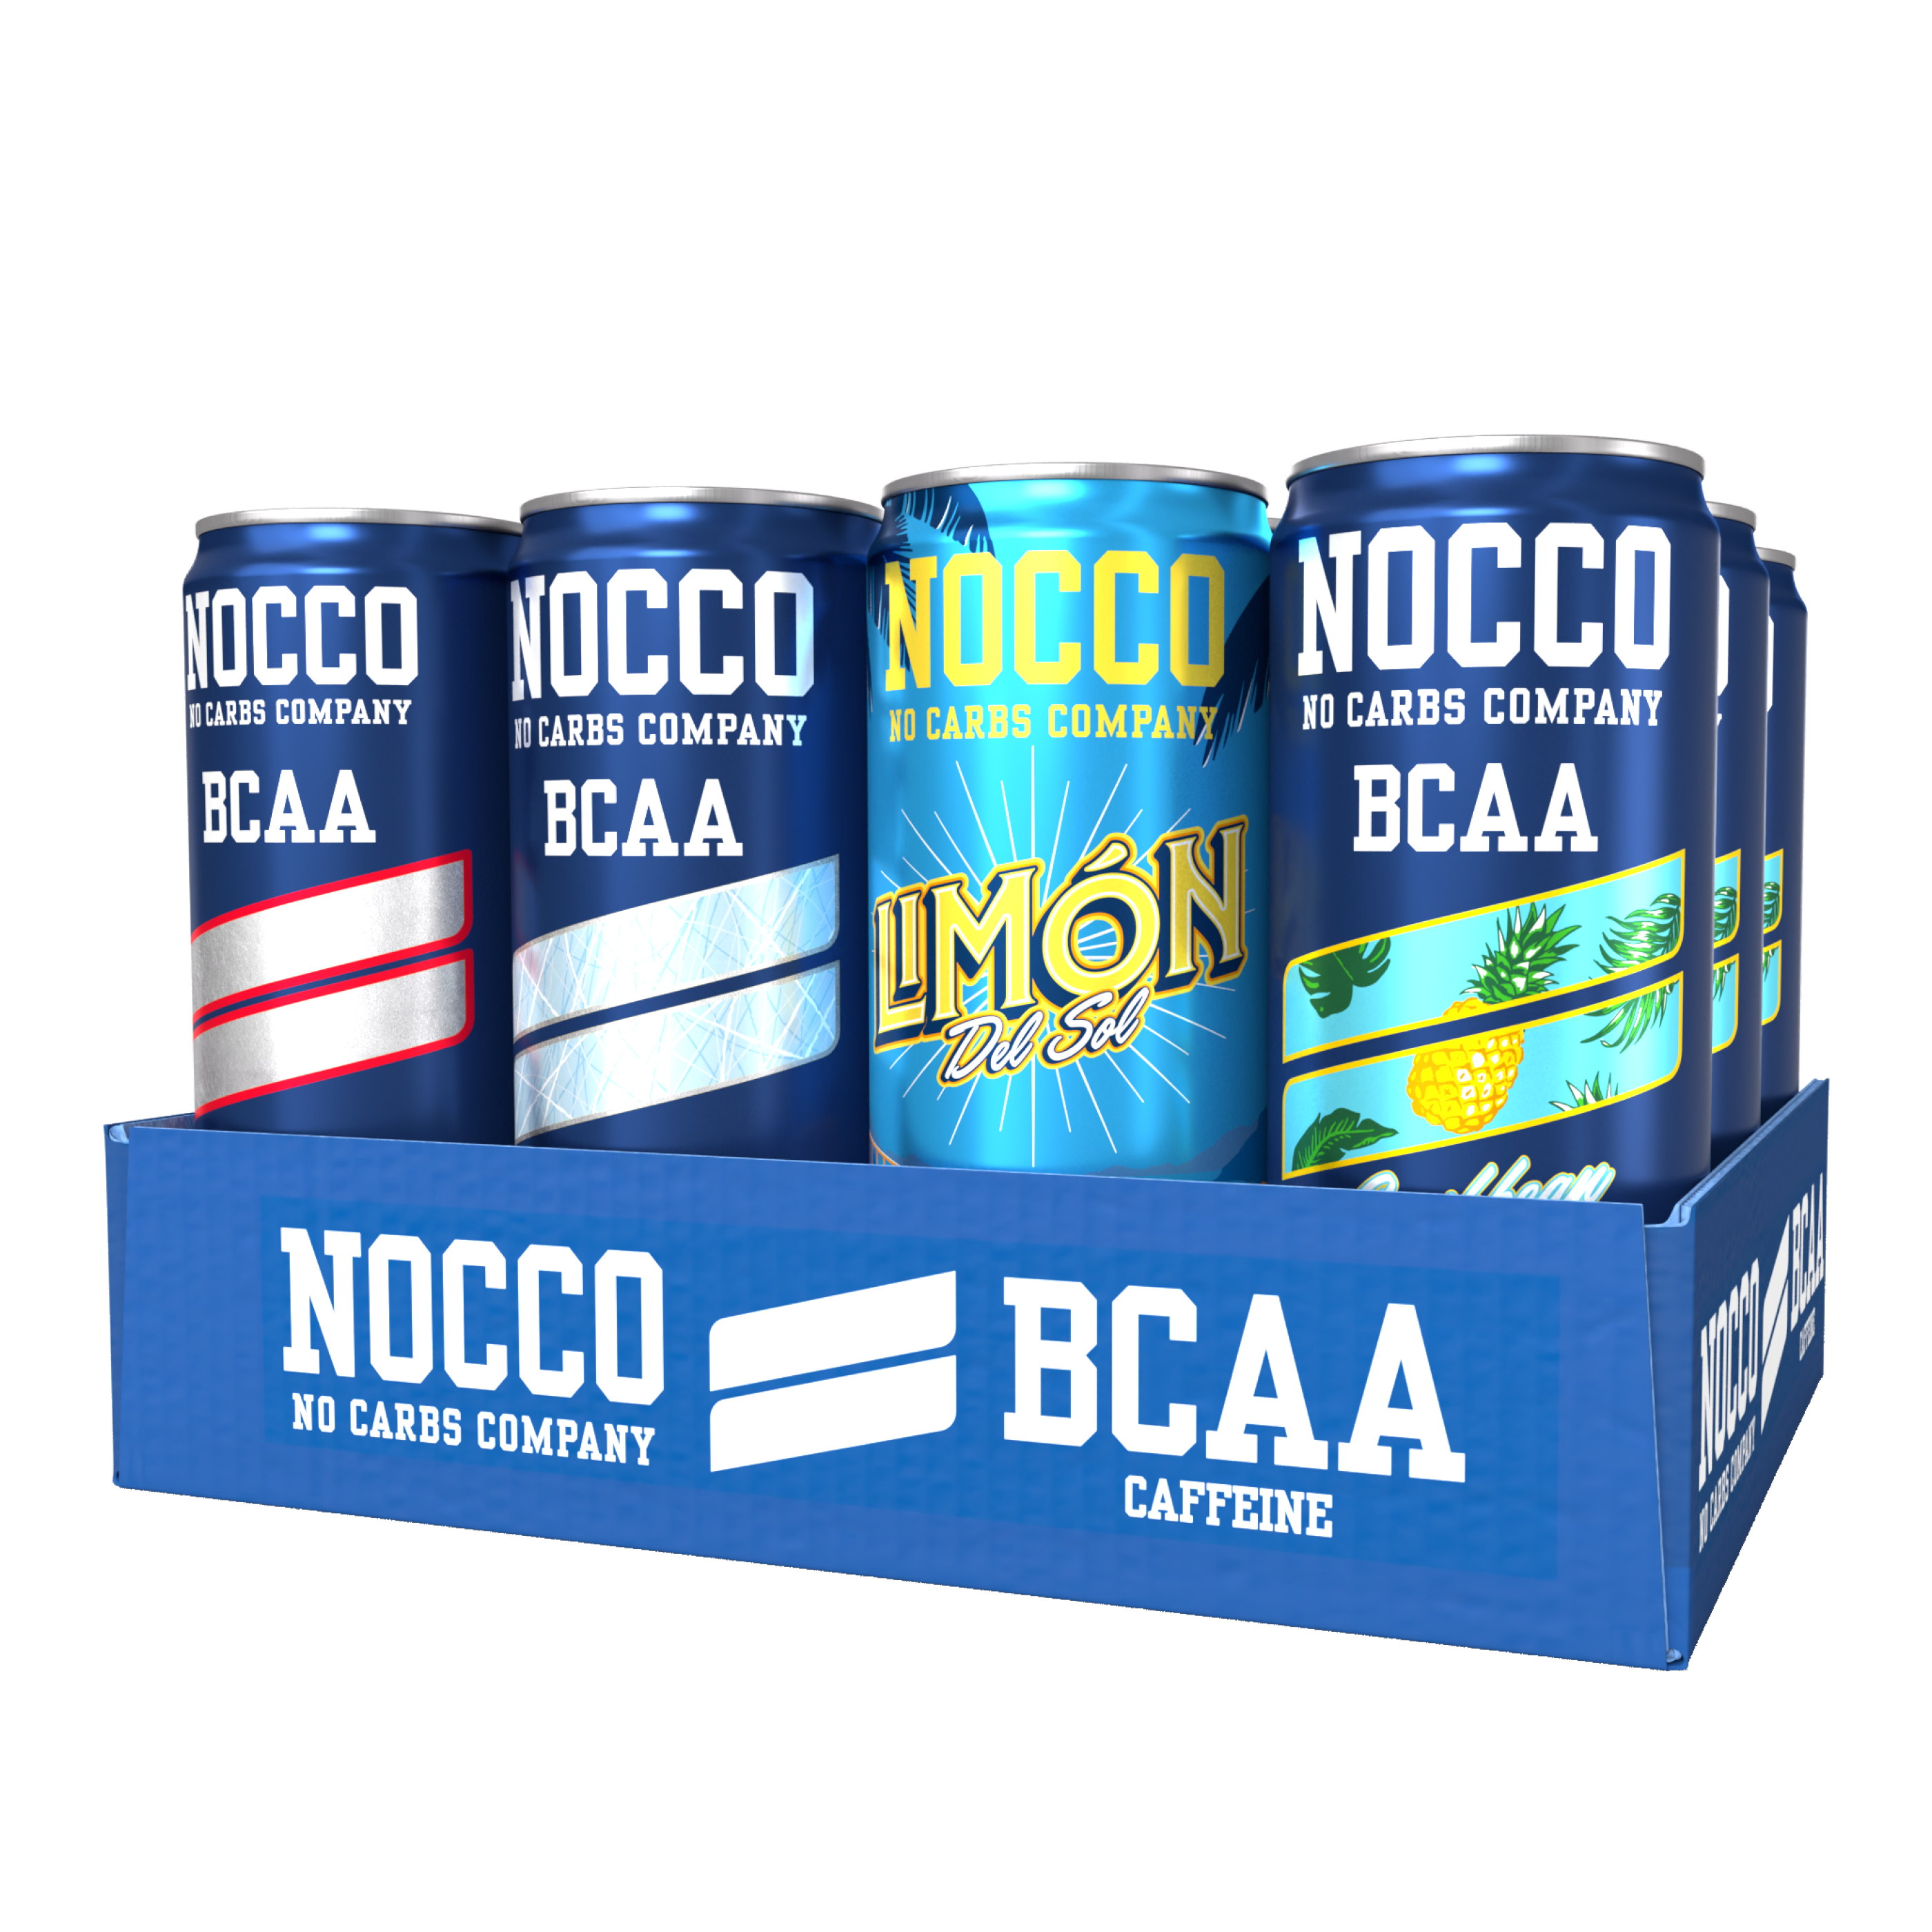 Nocco core flavours mixed case